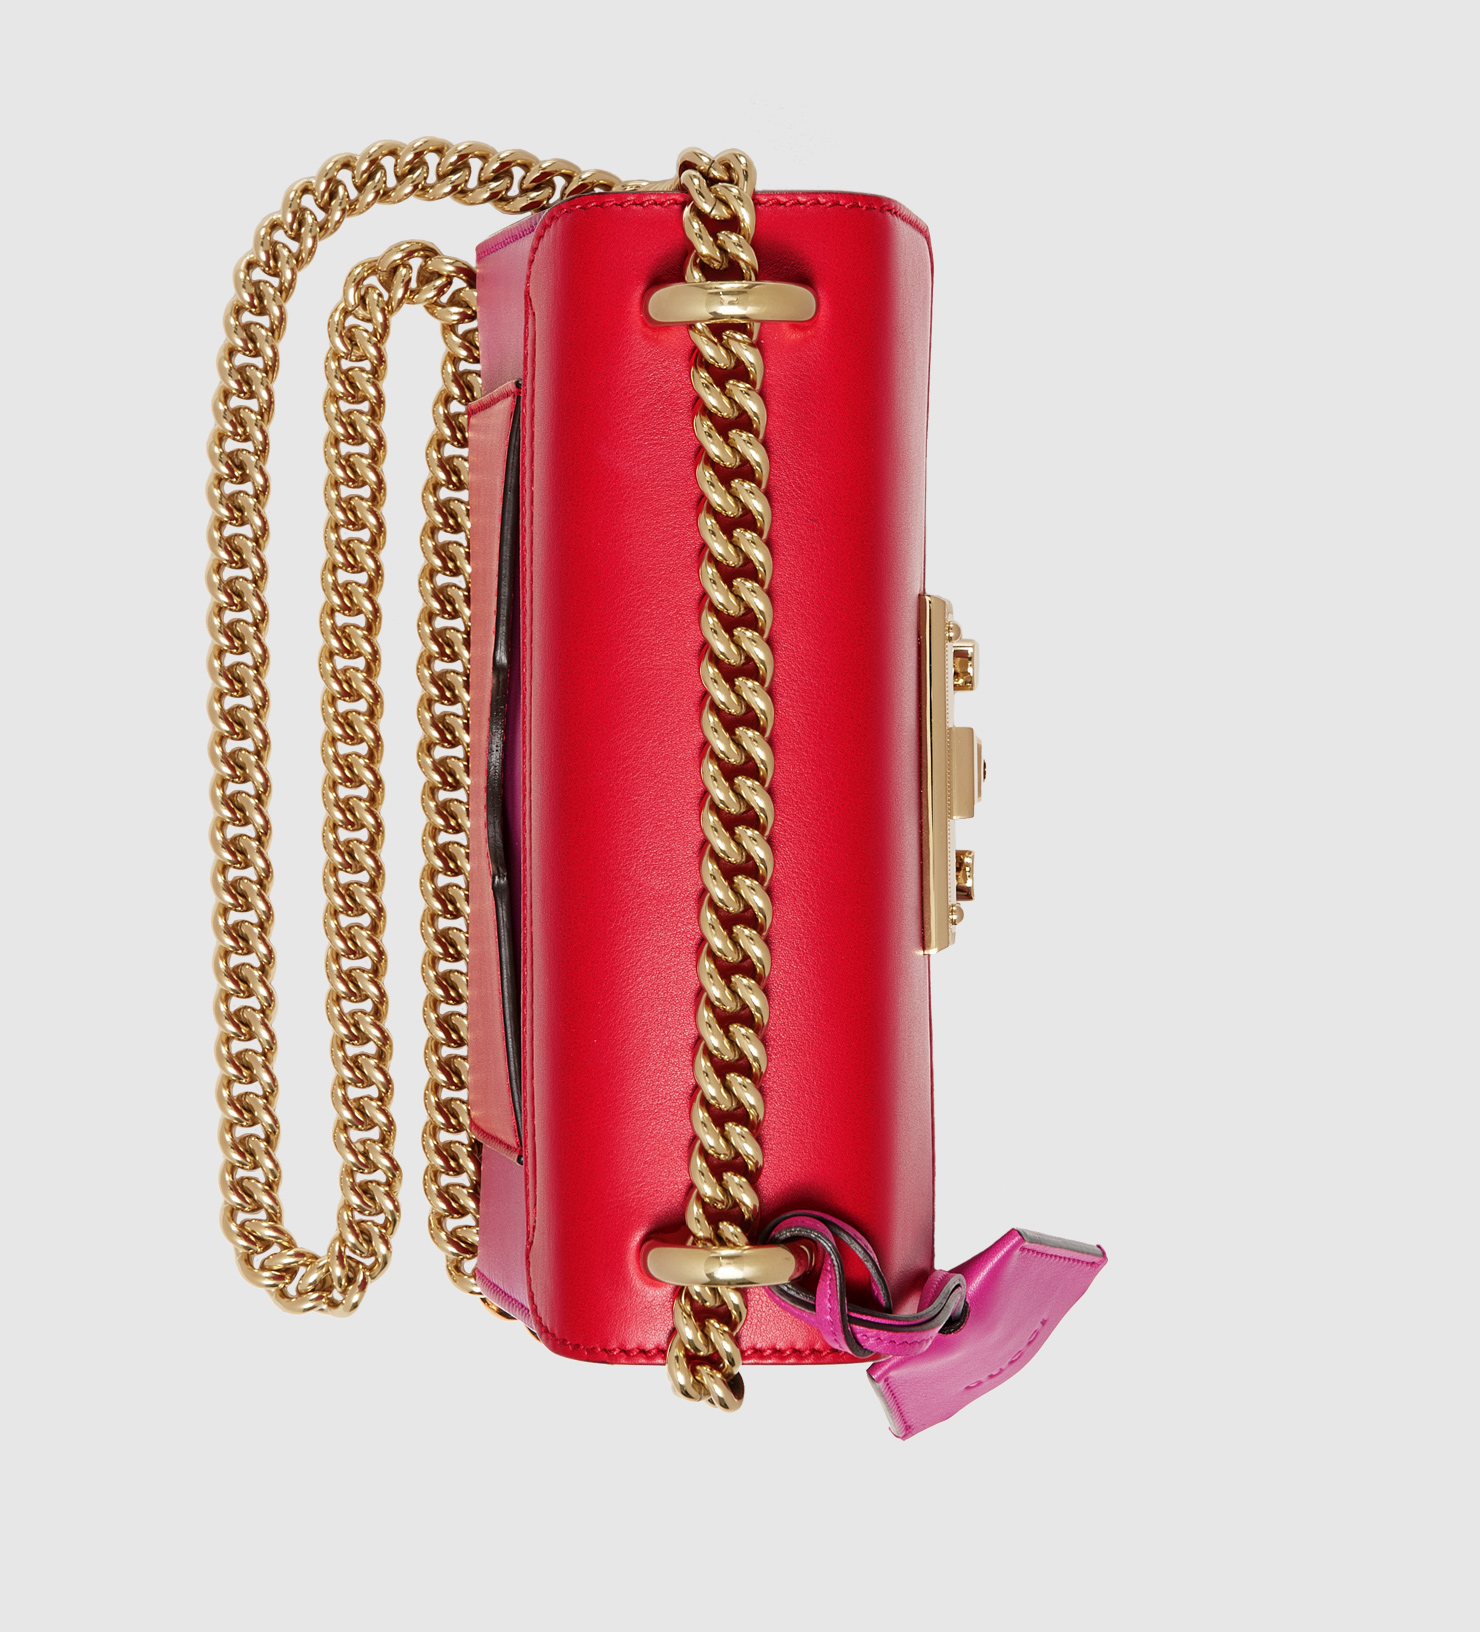 Lyst - Gucci Padlock Signature Shoulder Bag in Red